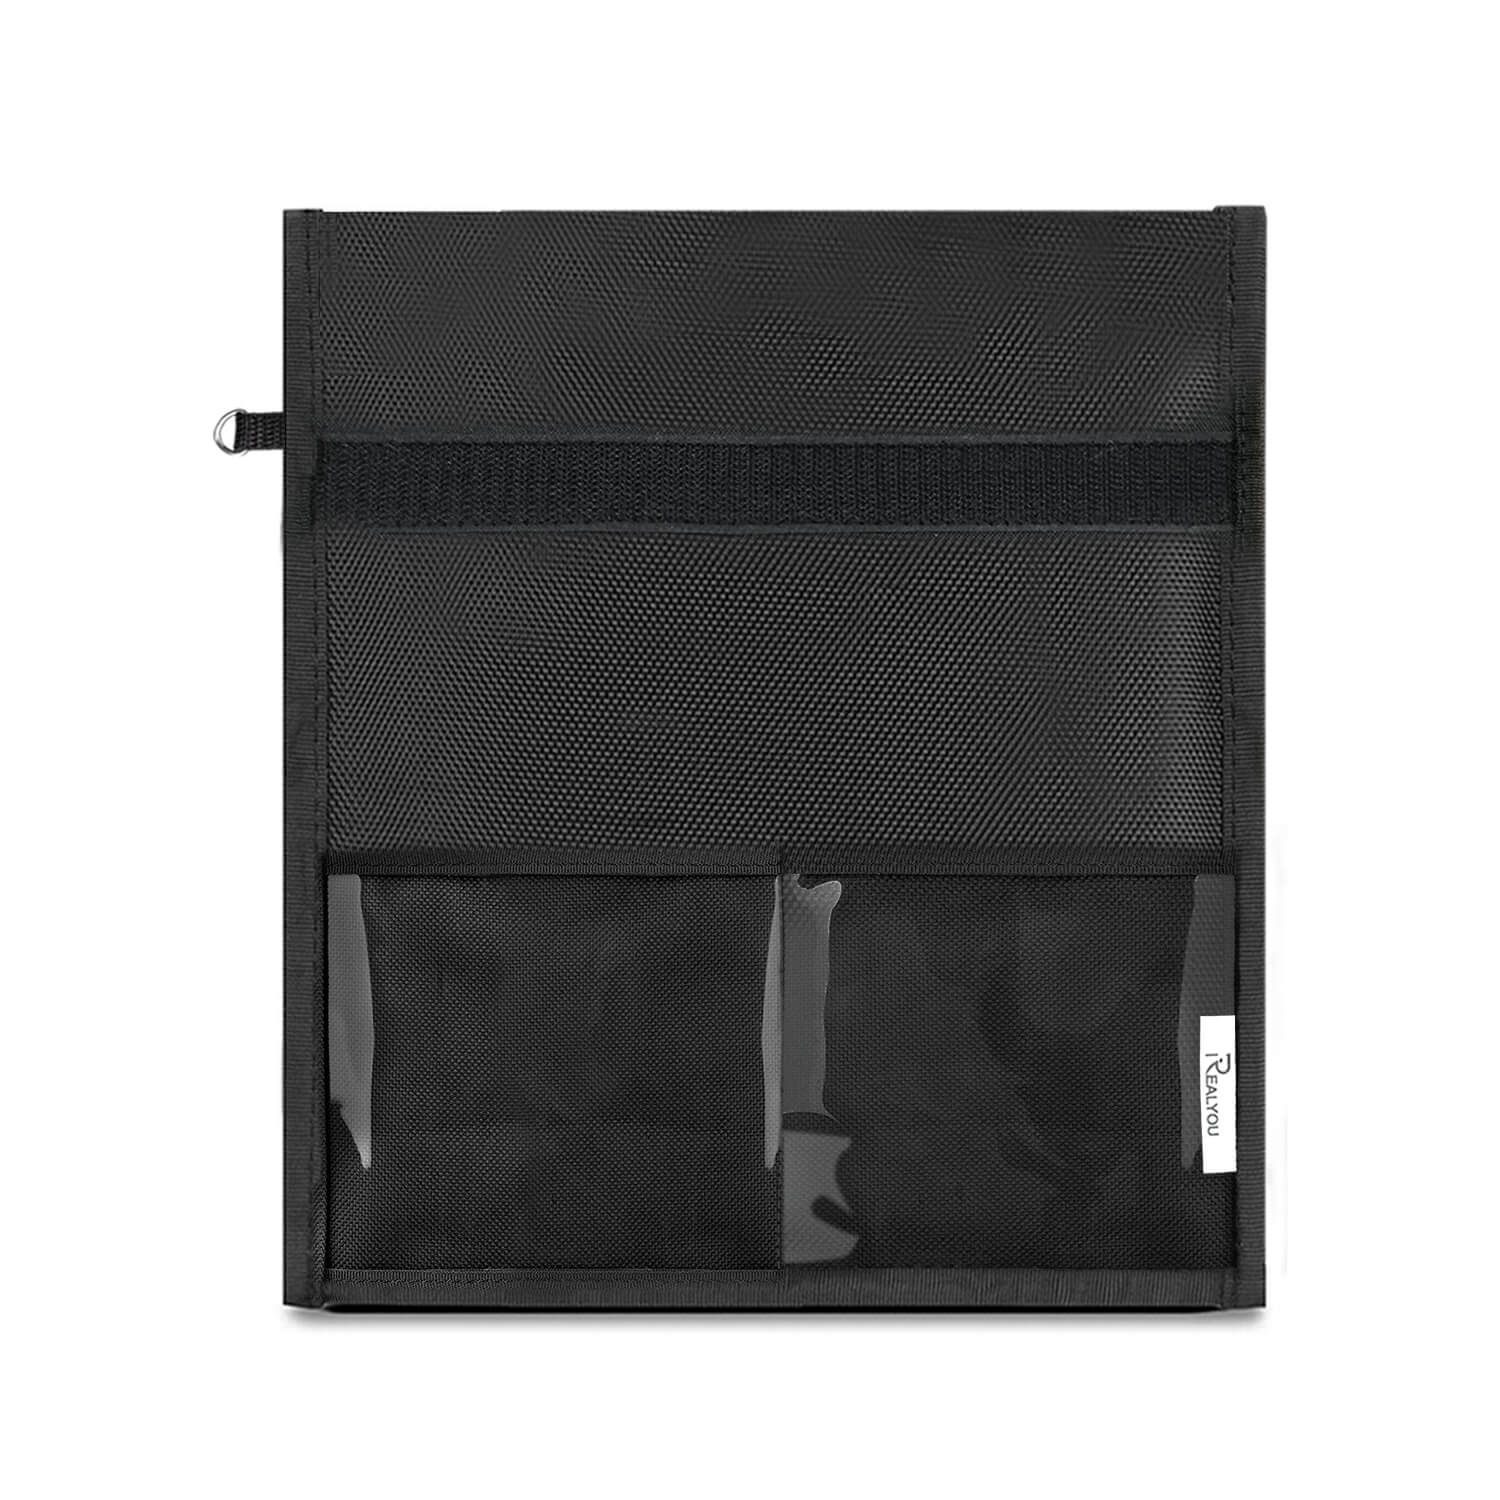 Faraday Laptop/Tablet Bag - Large 45cm x 35cm - Provides Protection Against EMF, Radiation, and Tracking - GroundedKiwi.nzlaptop bag laptop bag5gbagemf